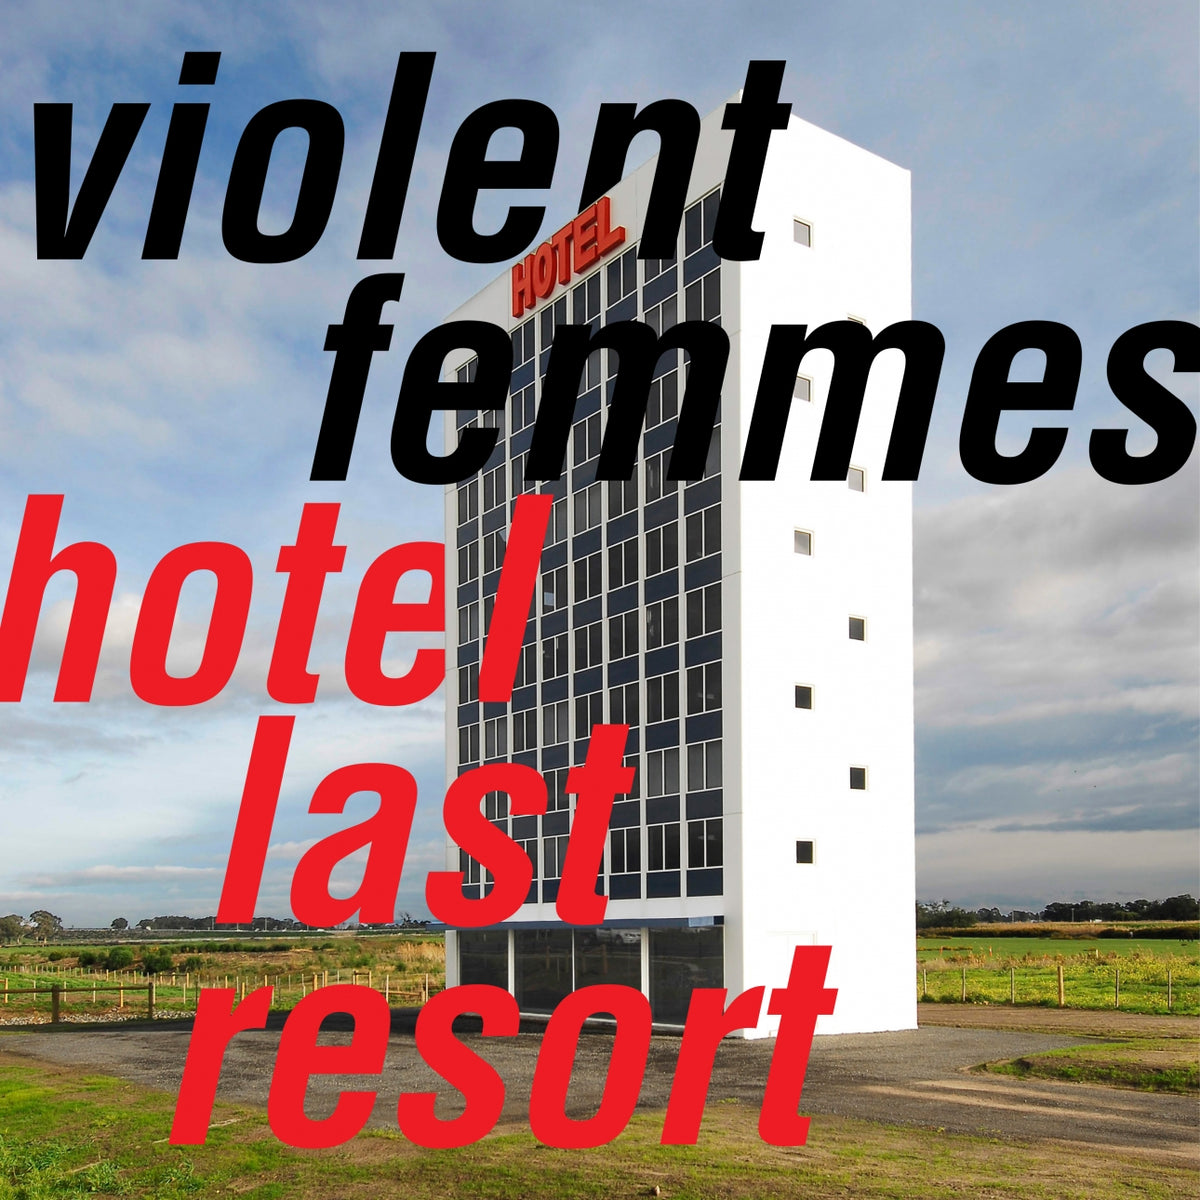 Violent Femmes - Hotel Last Resort: LP Azul: Indie Exclusive 750 copias